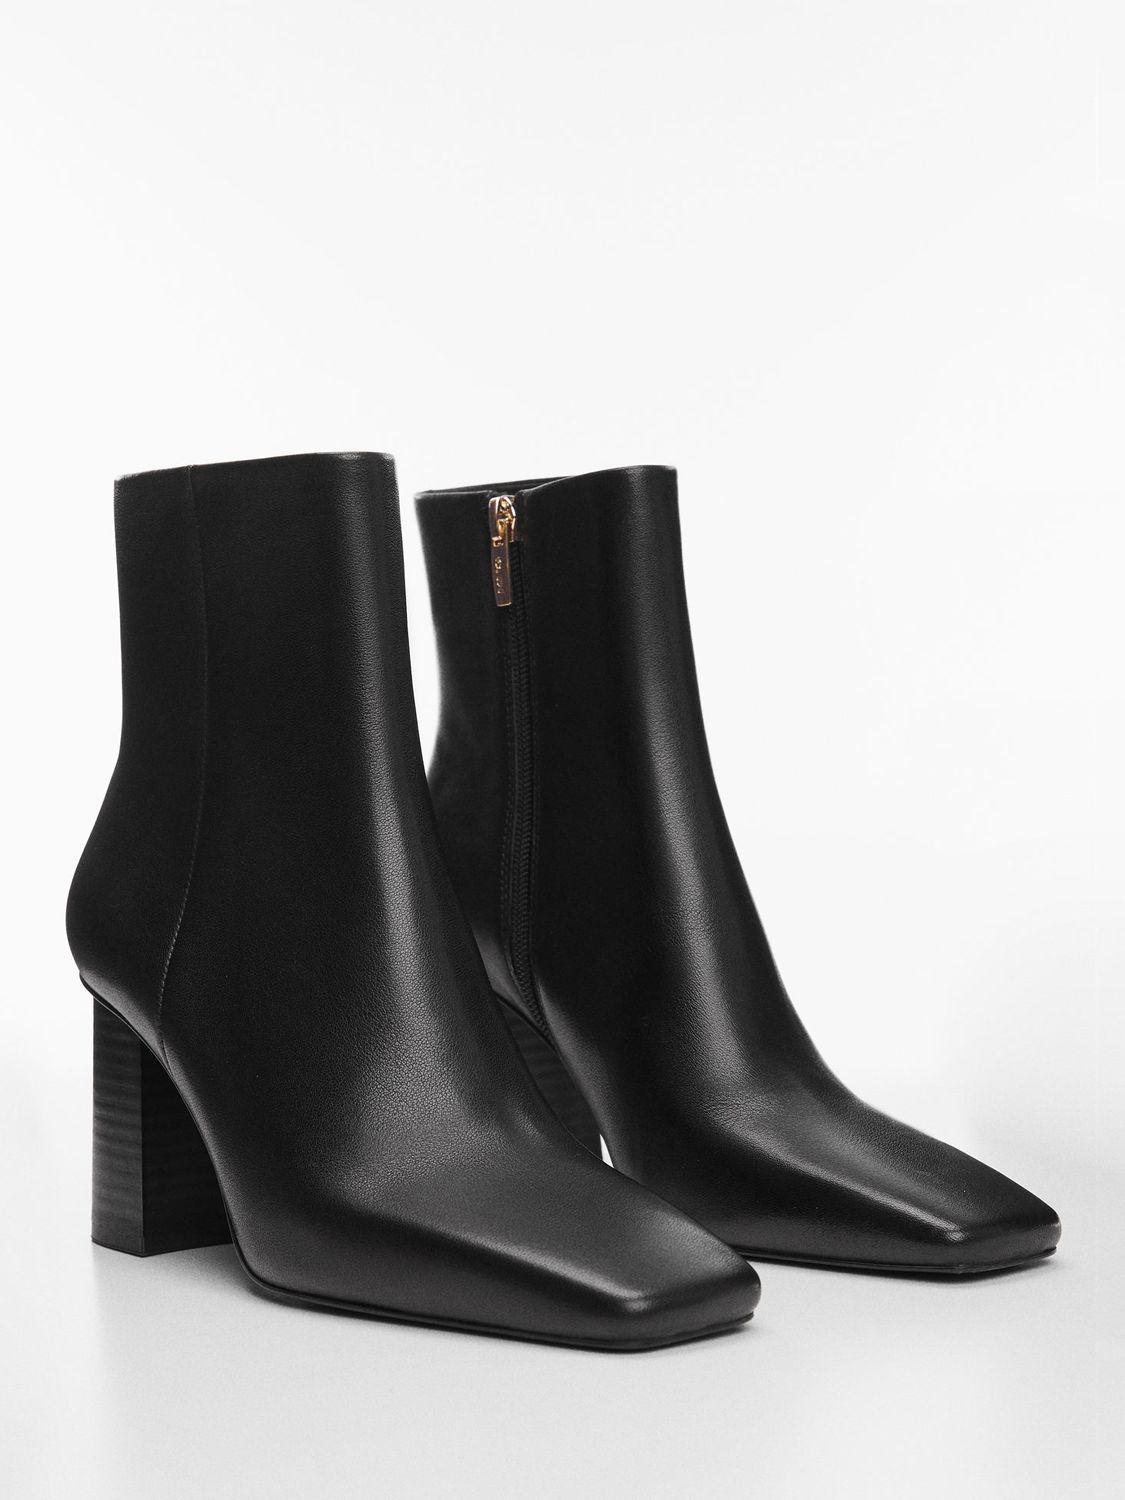 Mango Guindo Square Toe Leather Ankle Boots, Black, 2